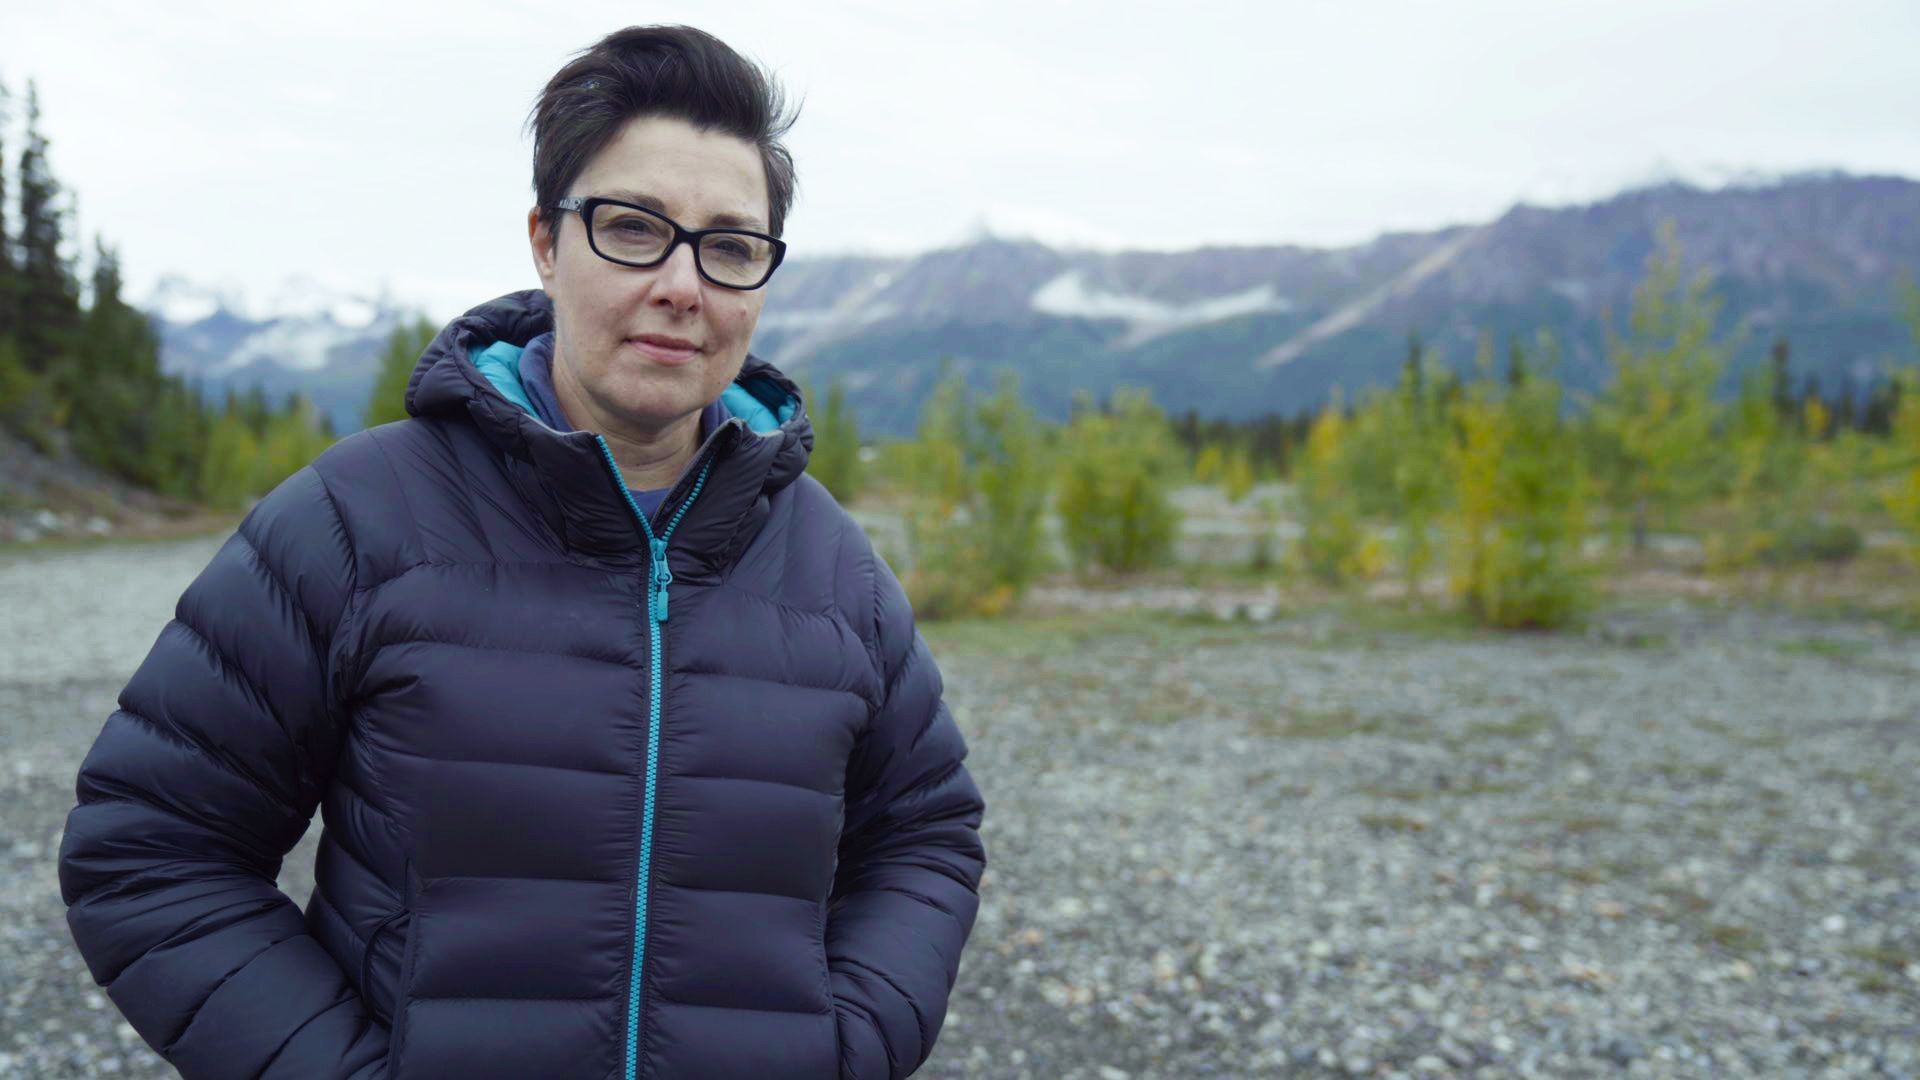 Sue Perkins [Presenter] in Wrangle St Elias National Park